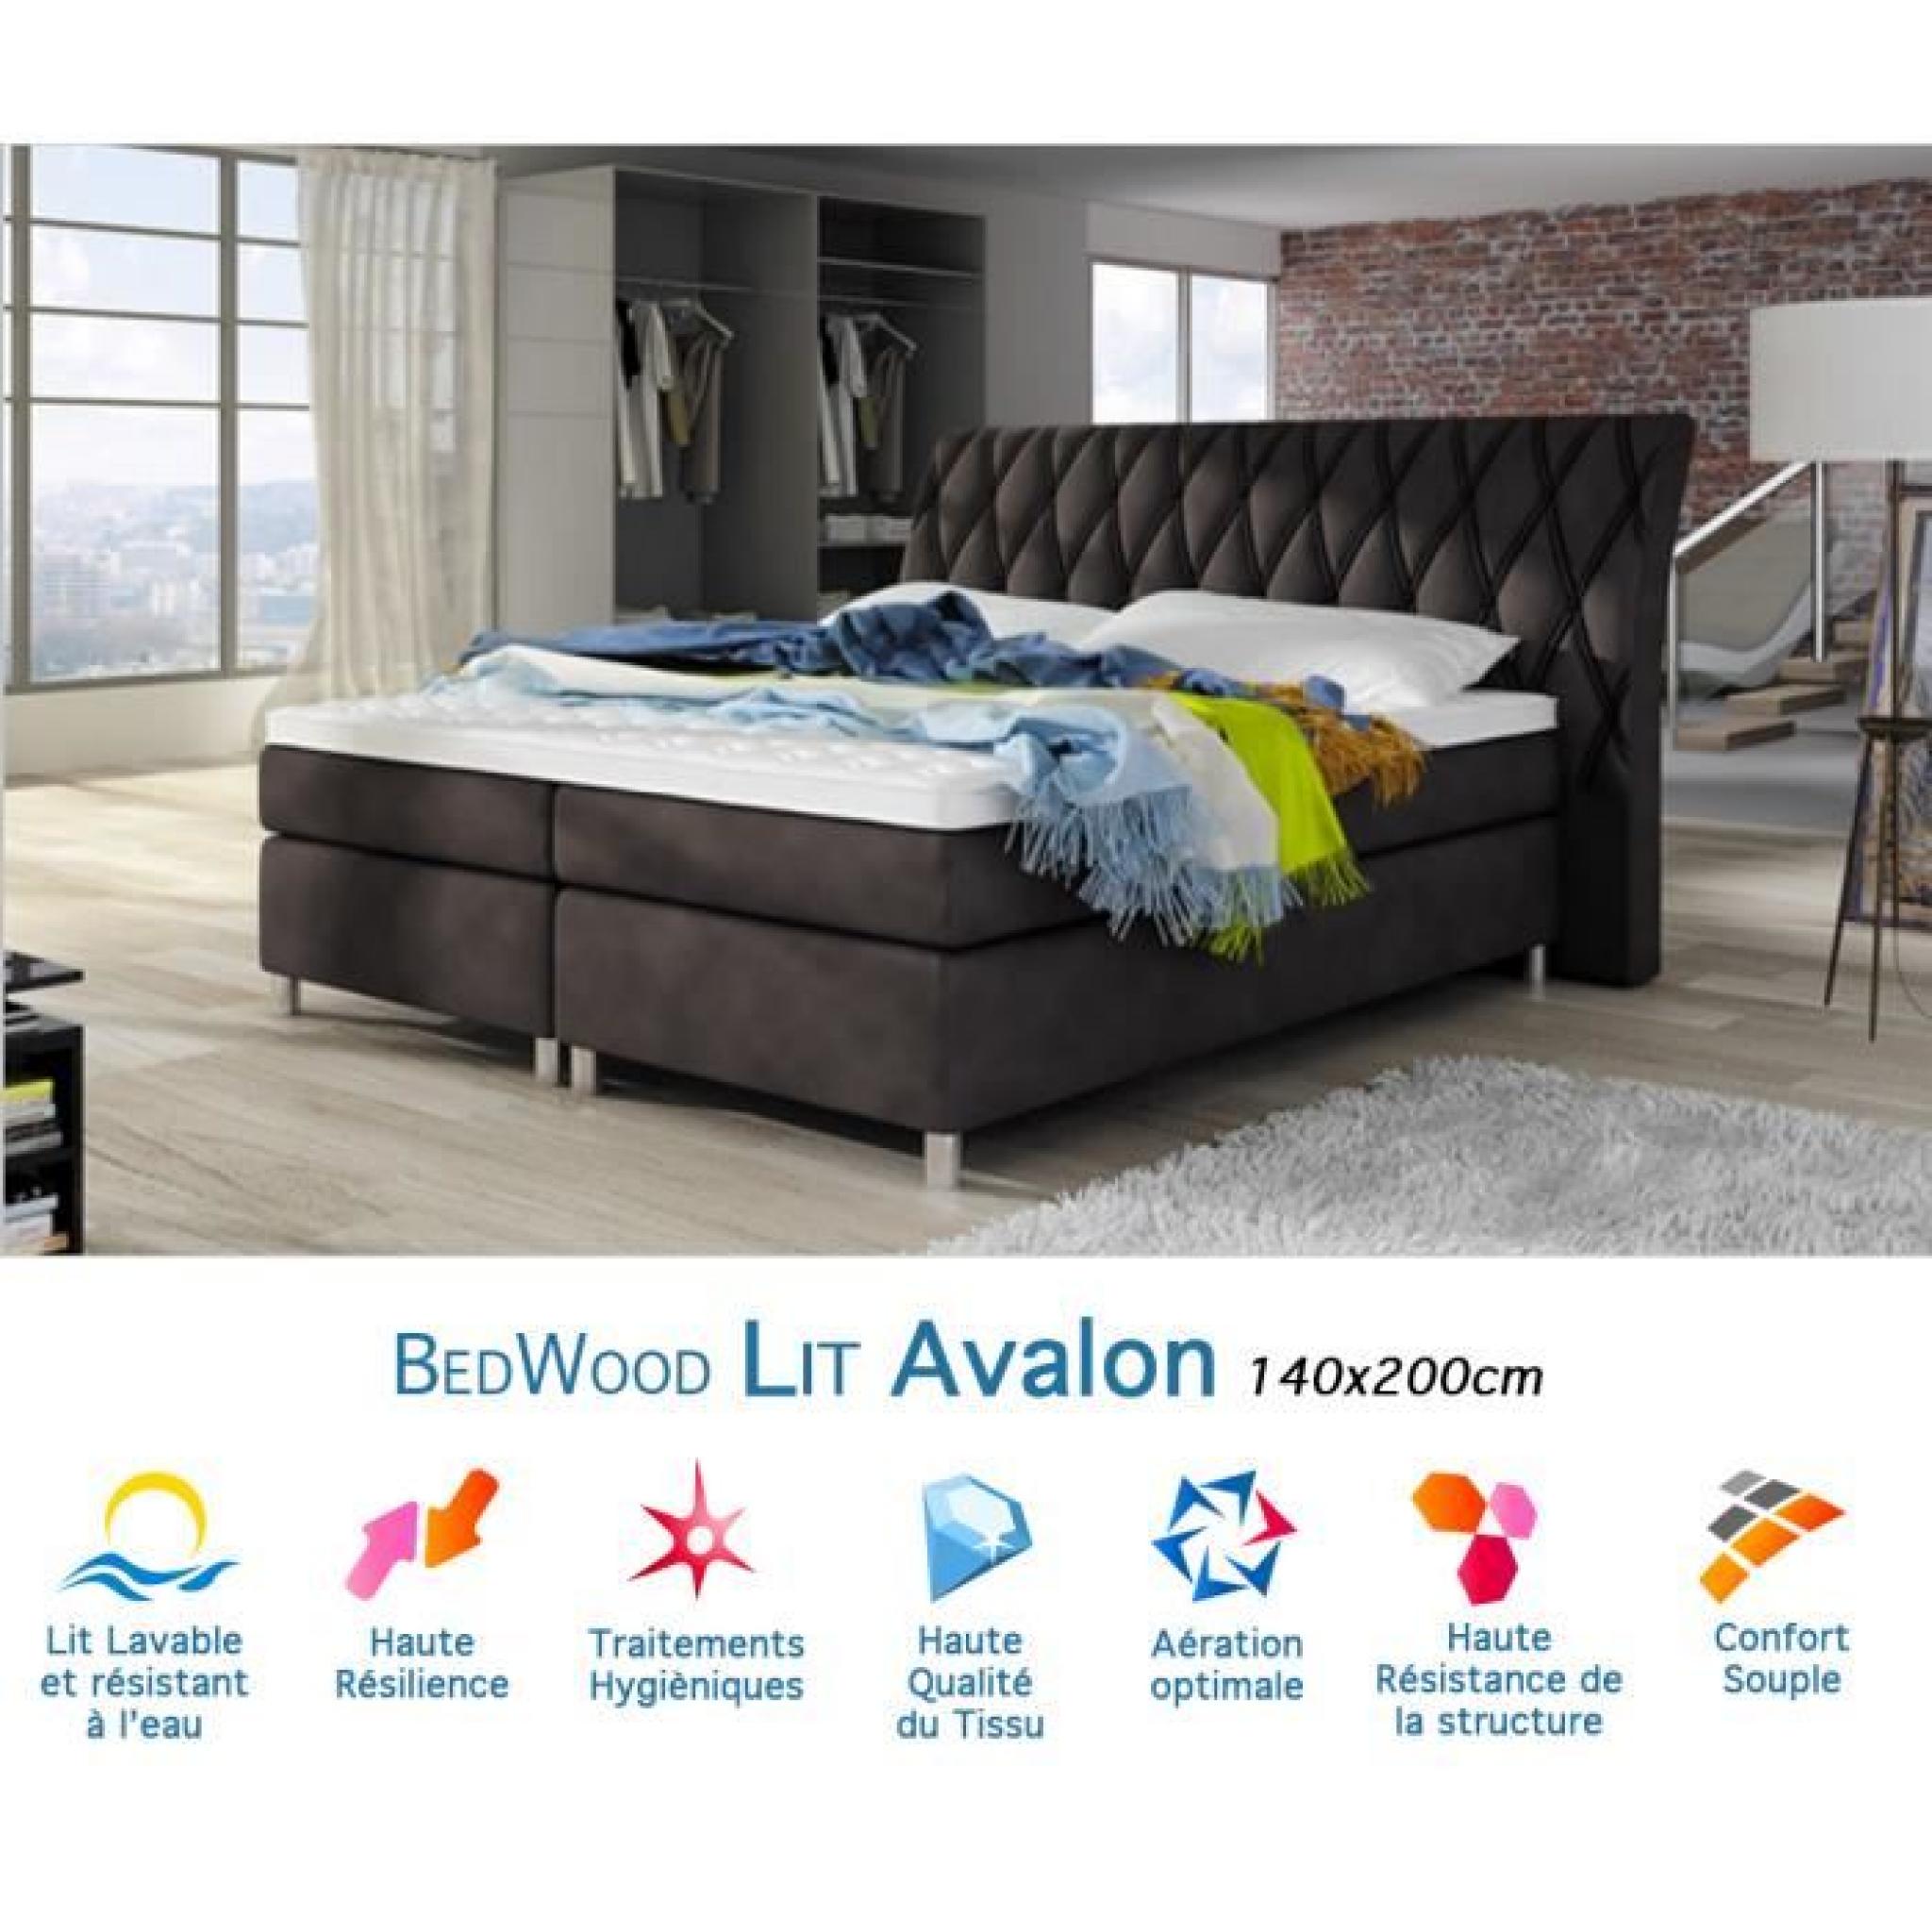 Lit Design Bedwood Avalon 140x200cm